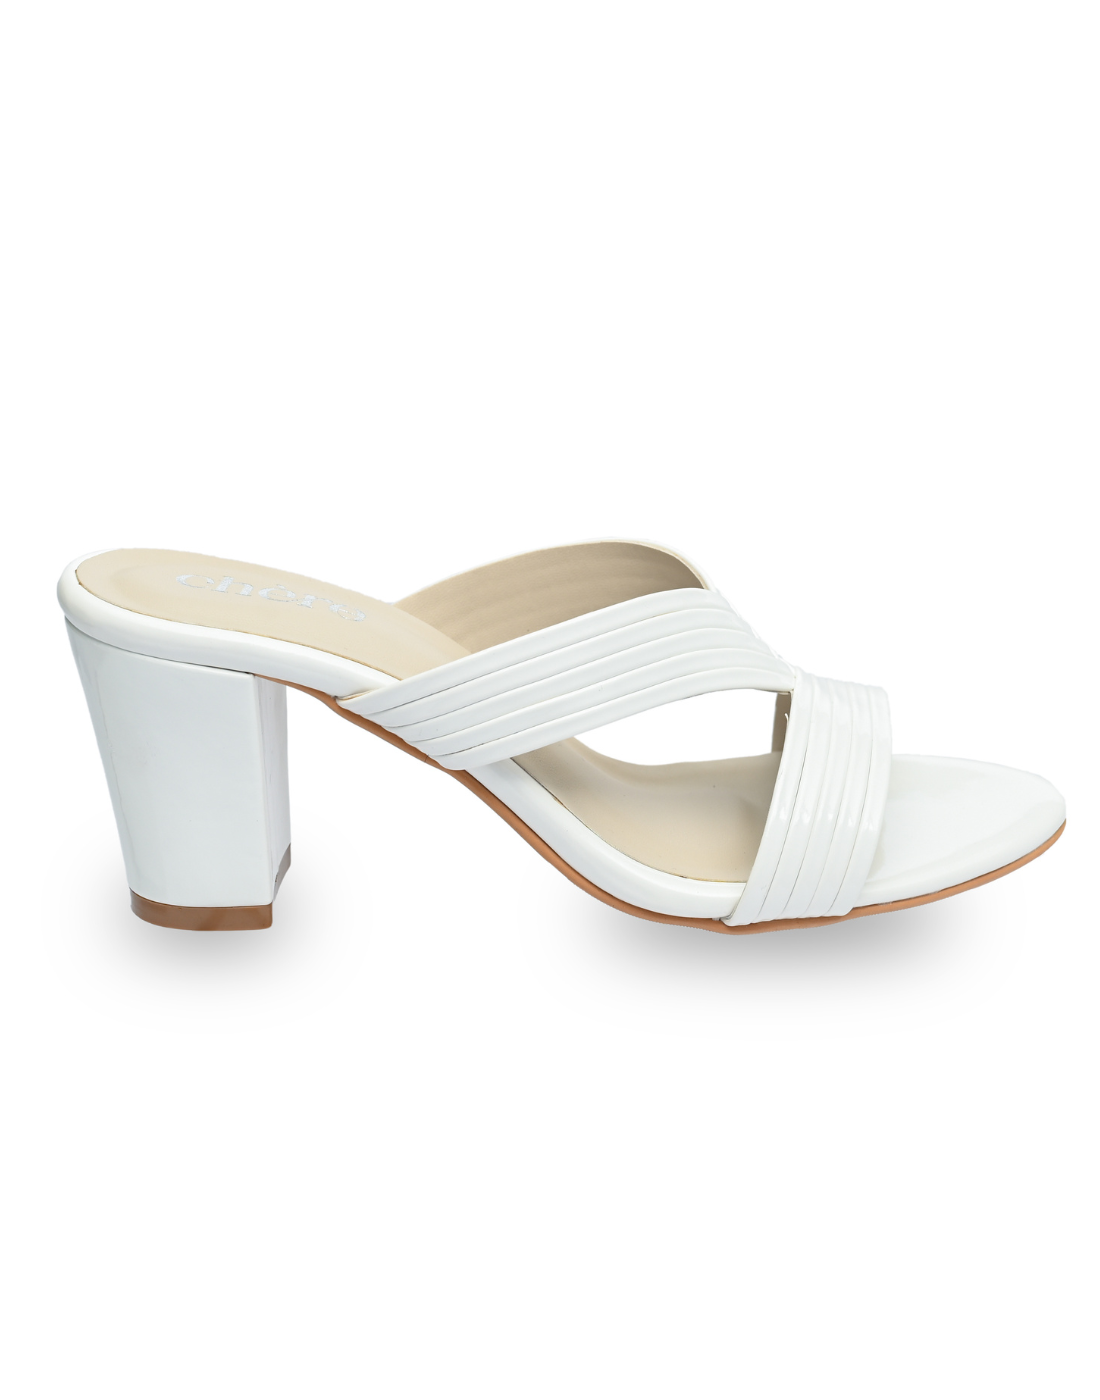 White Satin Block Heel Sandals, Bridal Heels, Bridesmaids Shoes